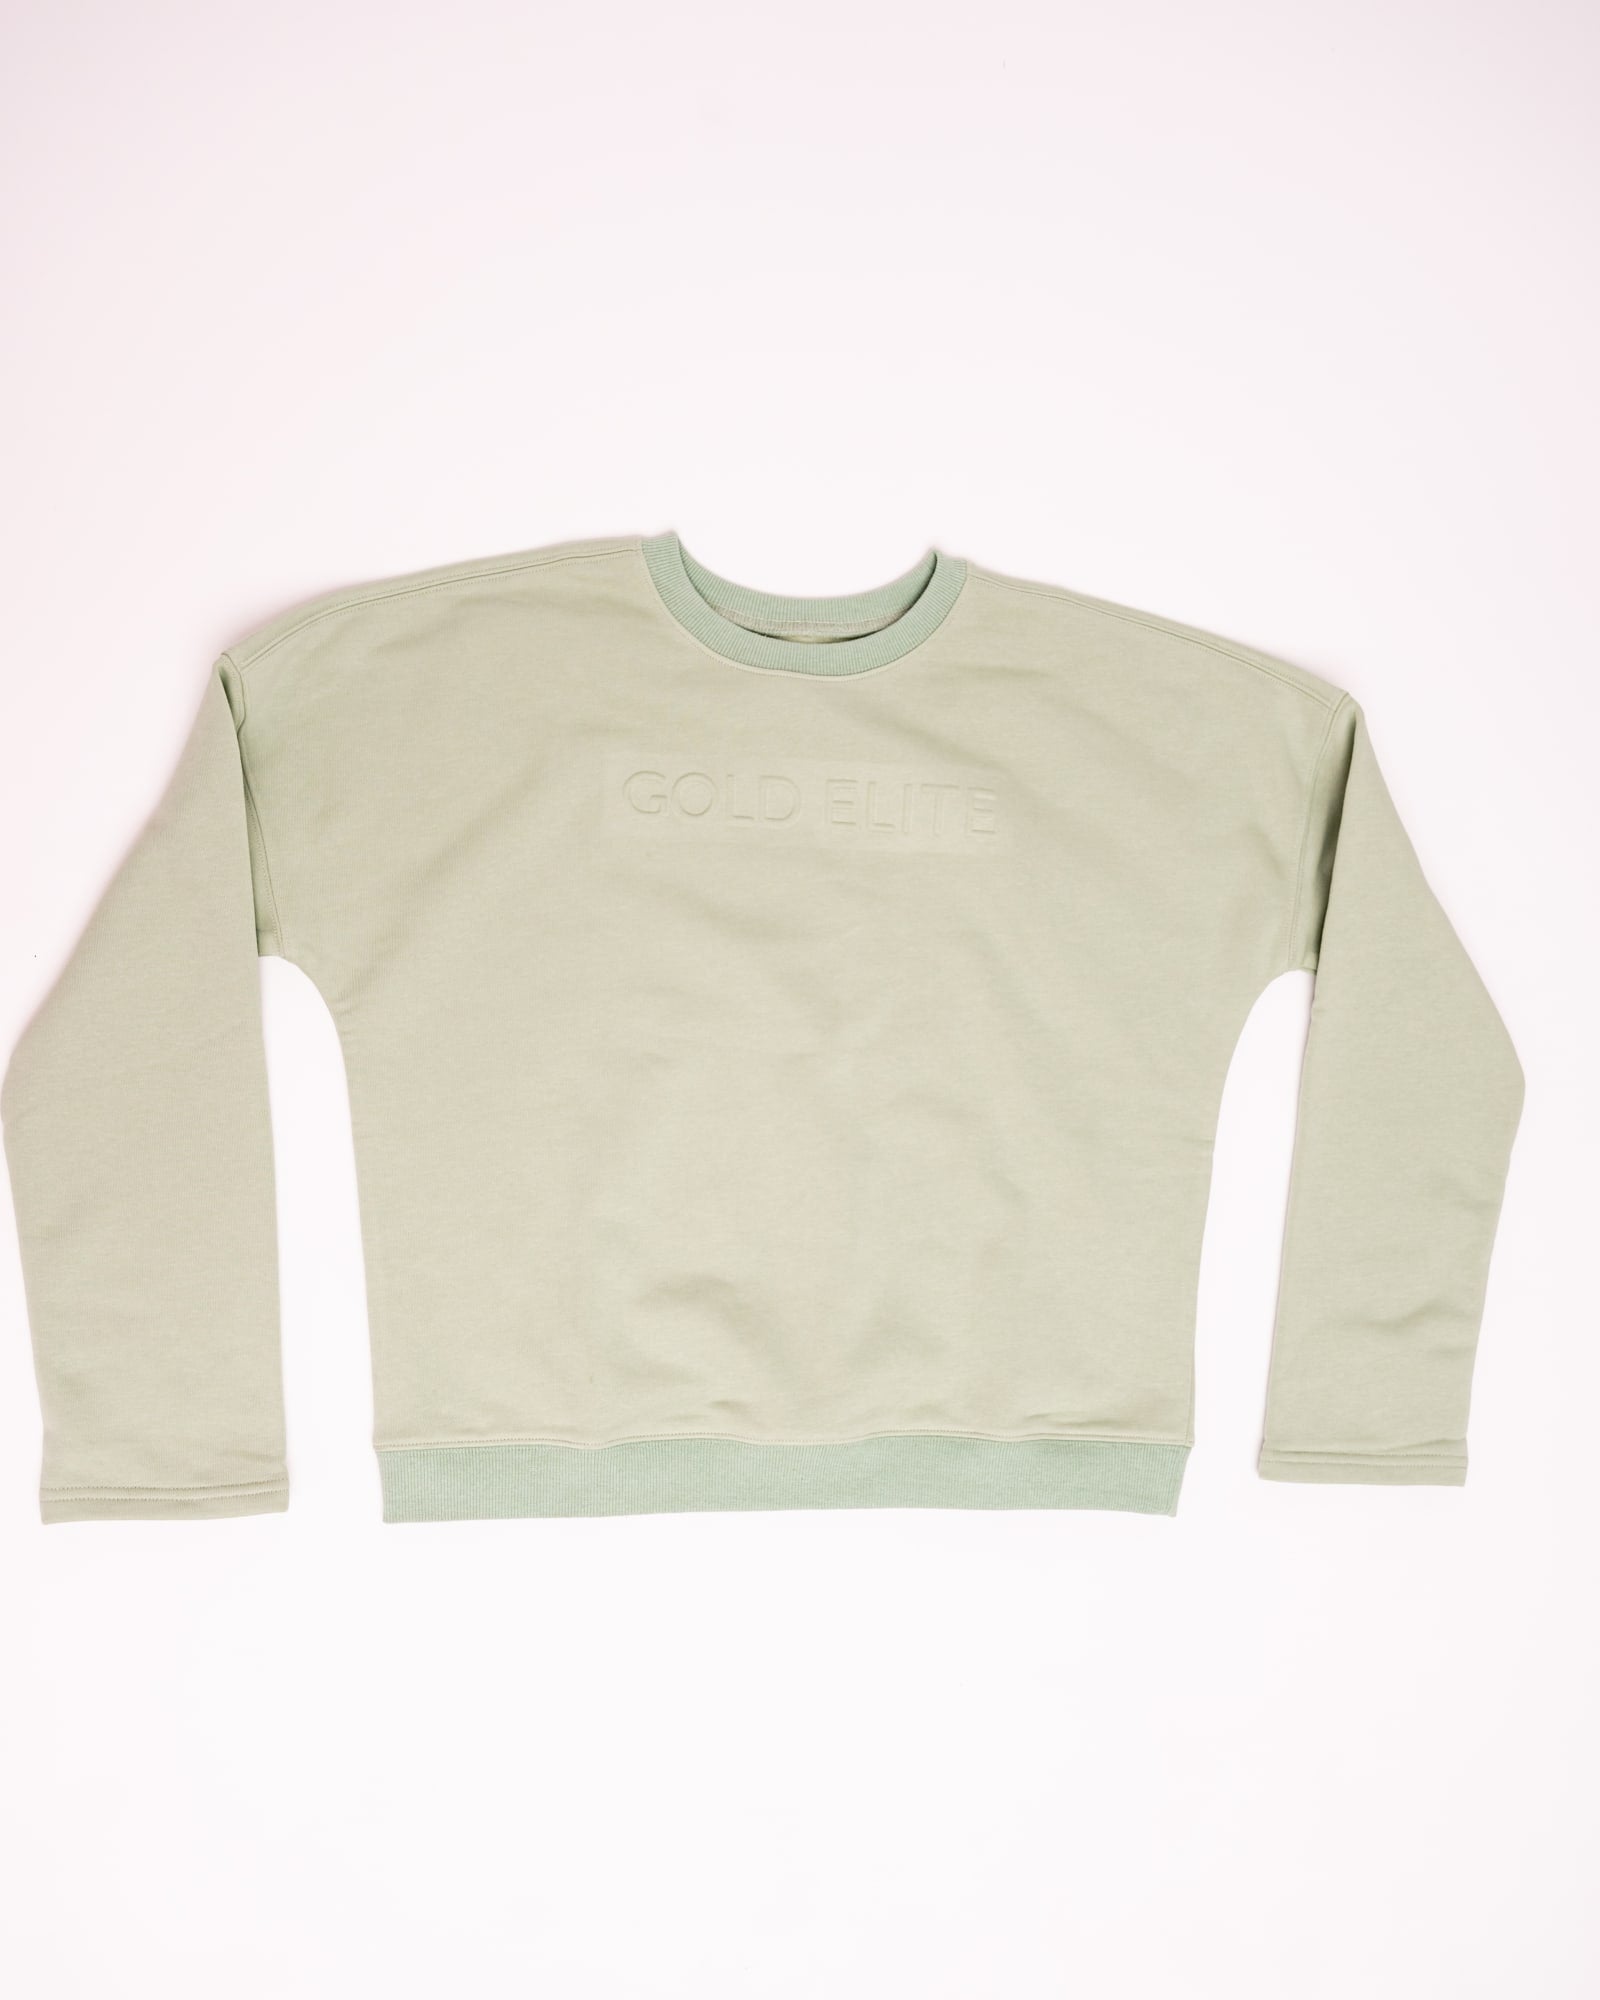 GOLD ELITE Crewneck Sweater | Ash Green